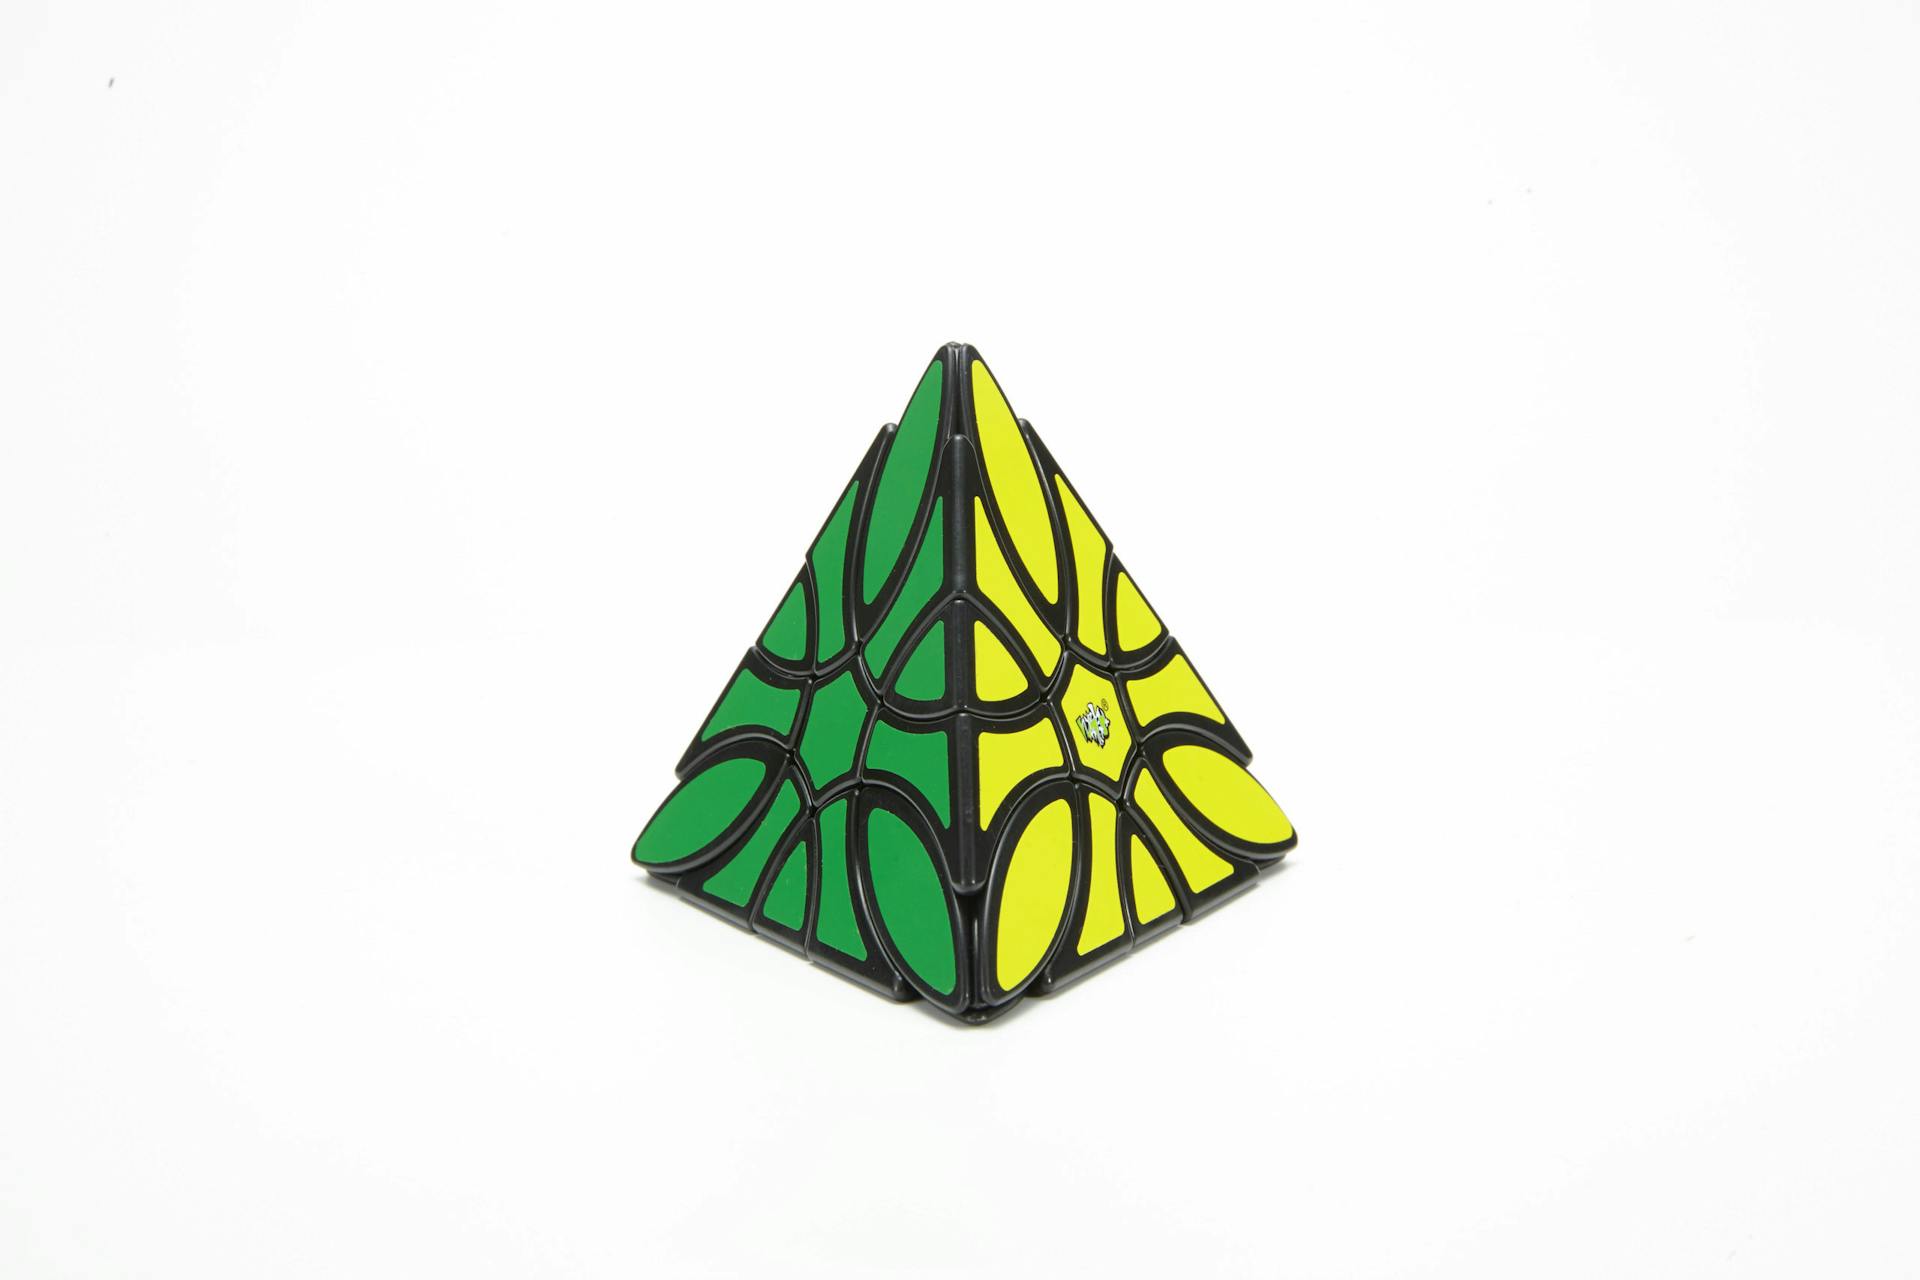 Lanlan Clover Pyraminx Cube